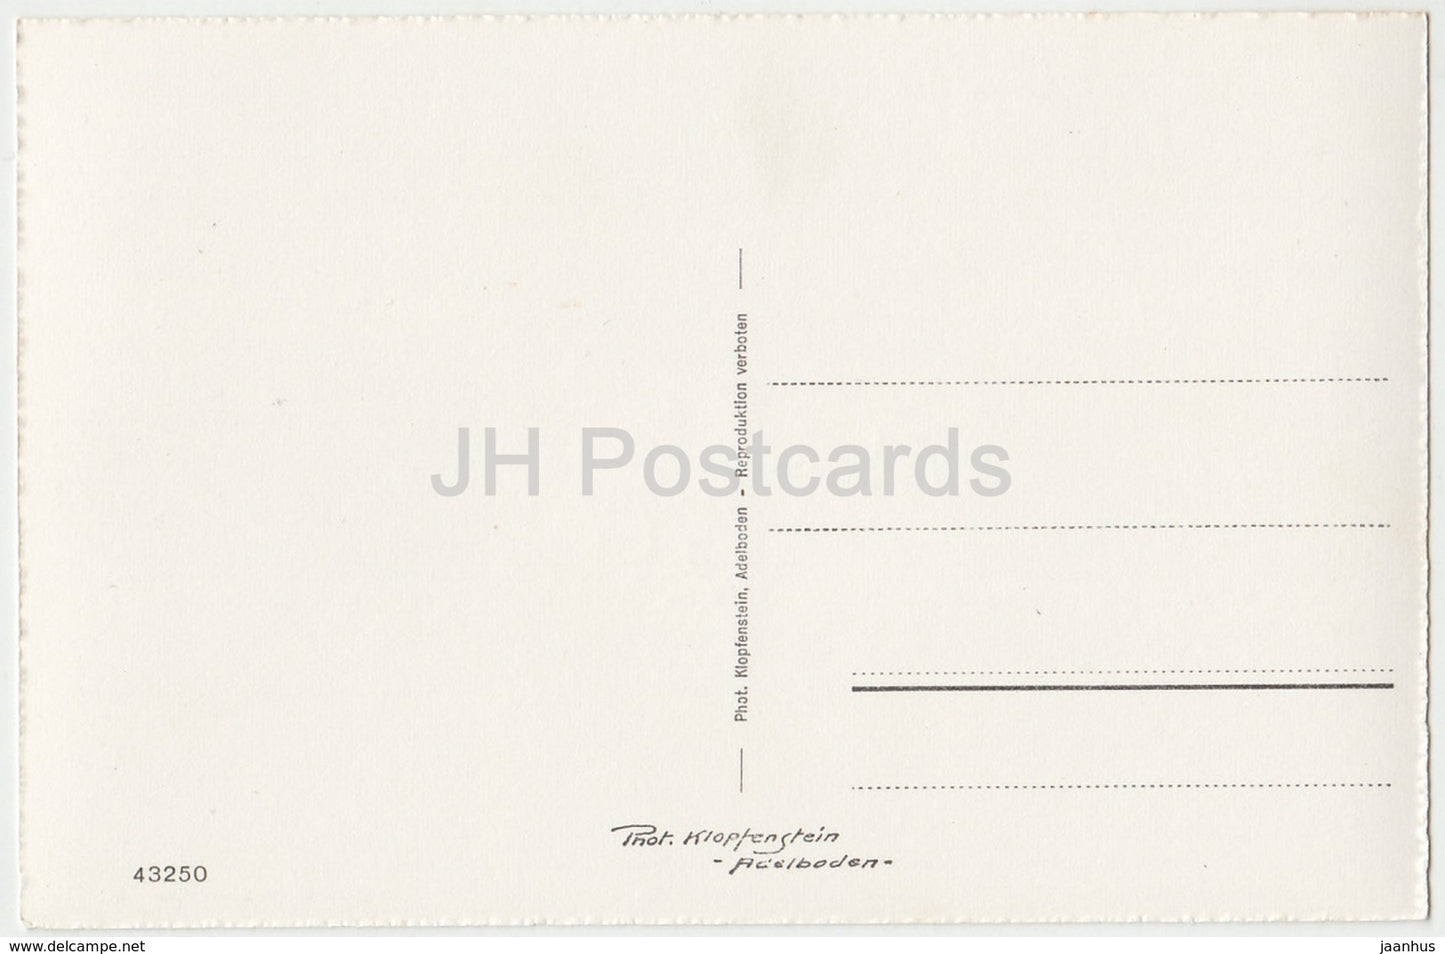 Munster im Goms - multiview - 43250 - Switzerland - old postcard - unused